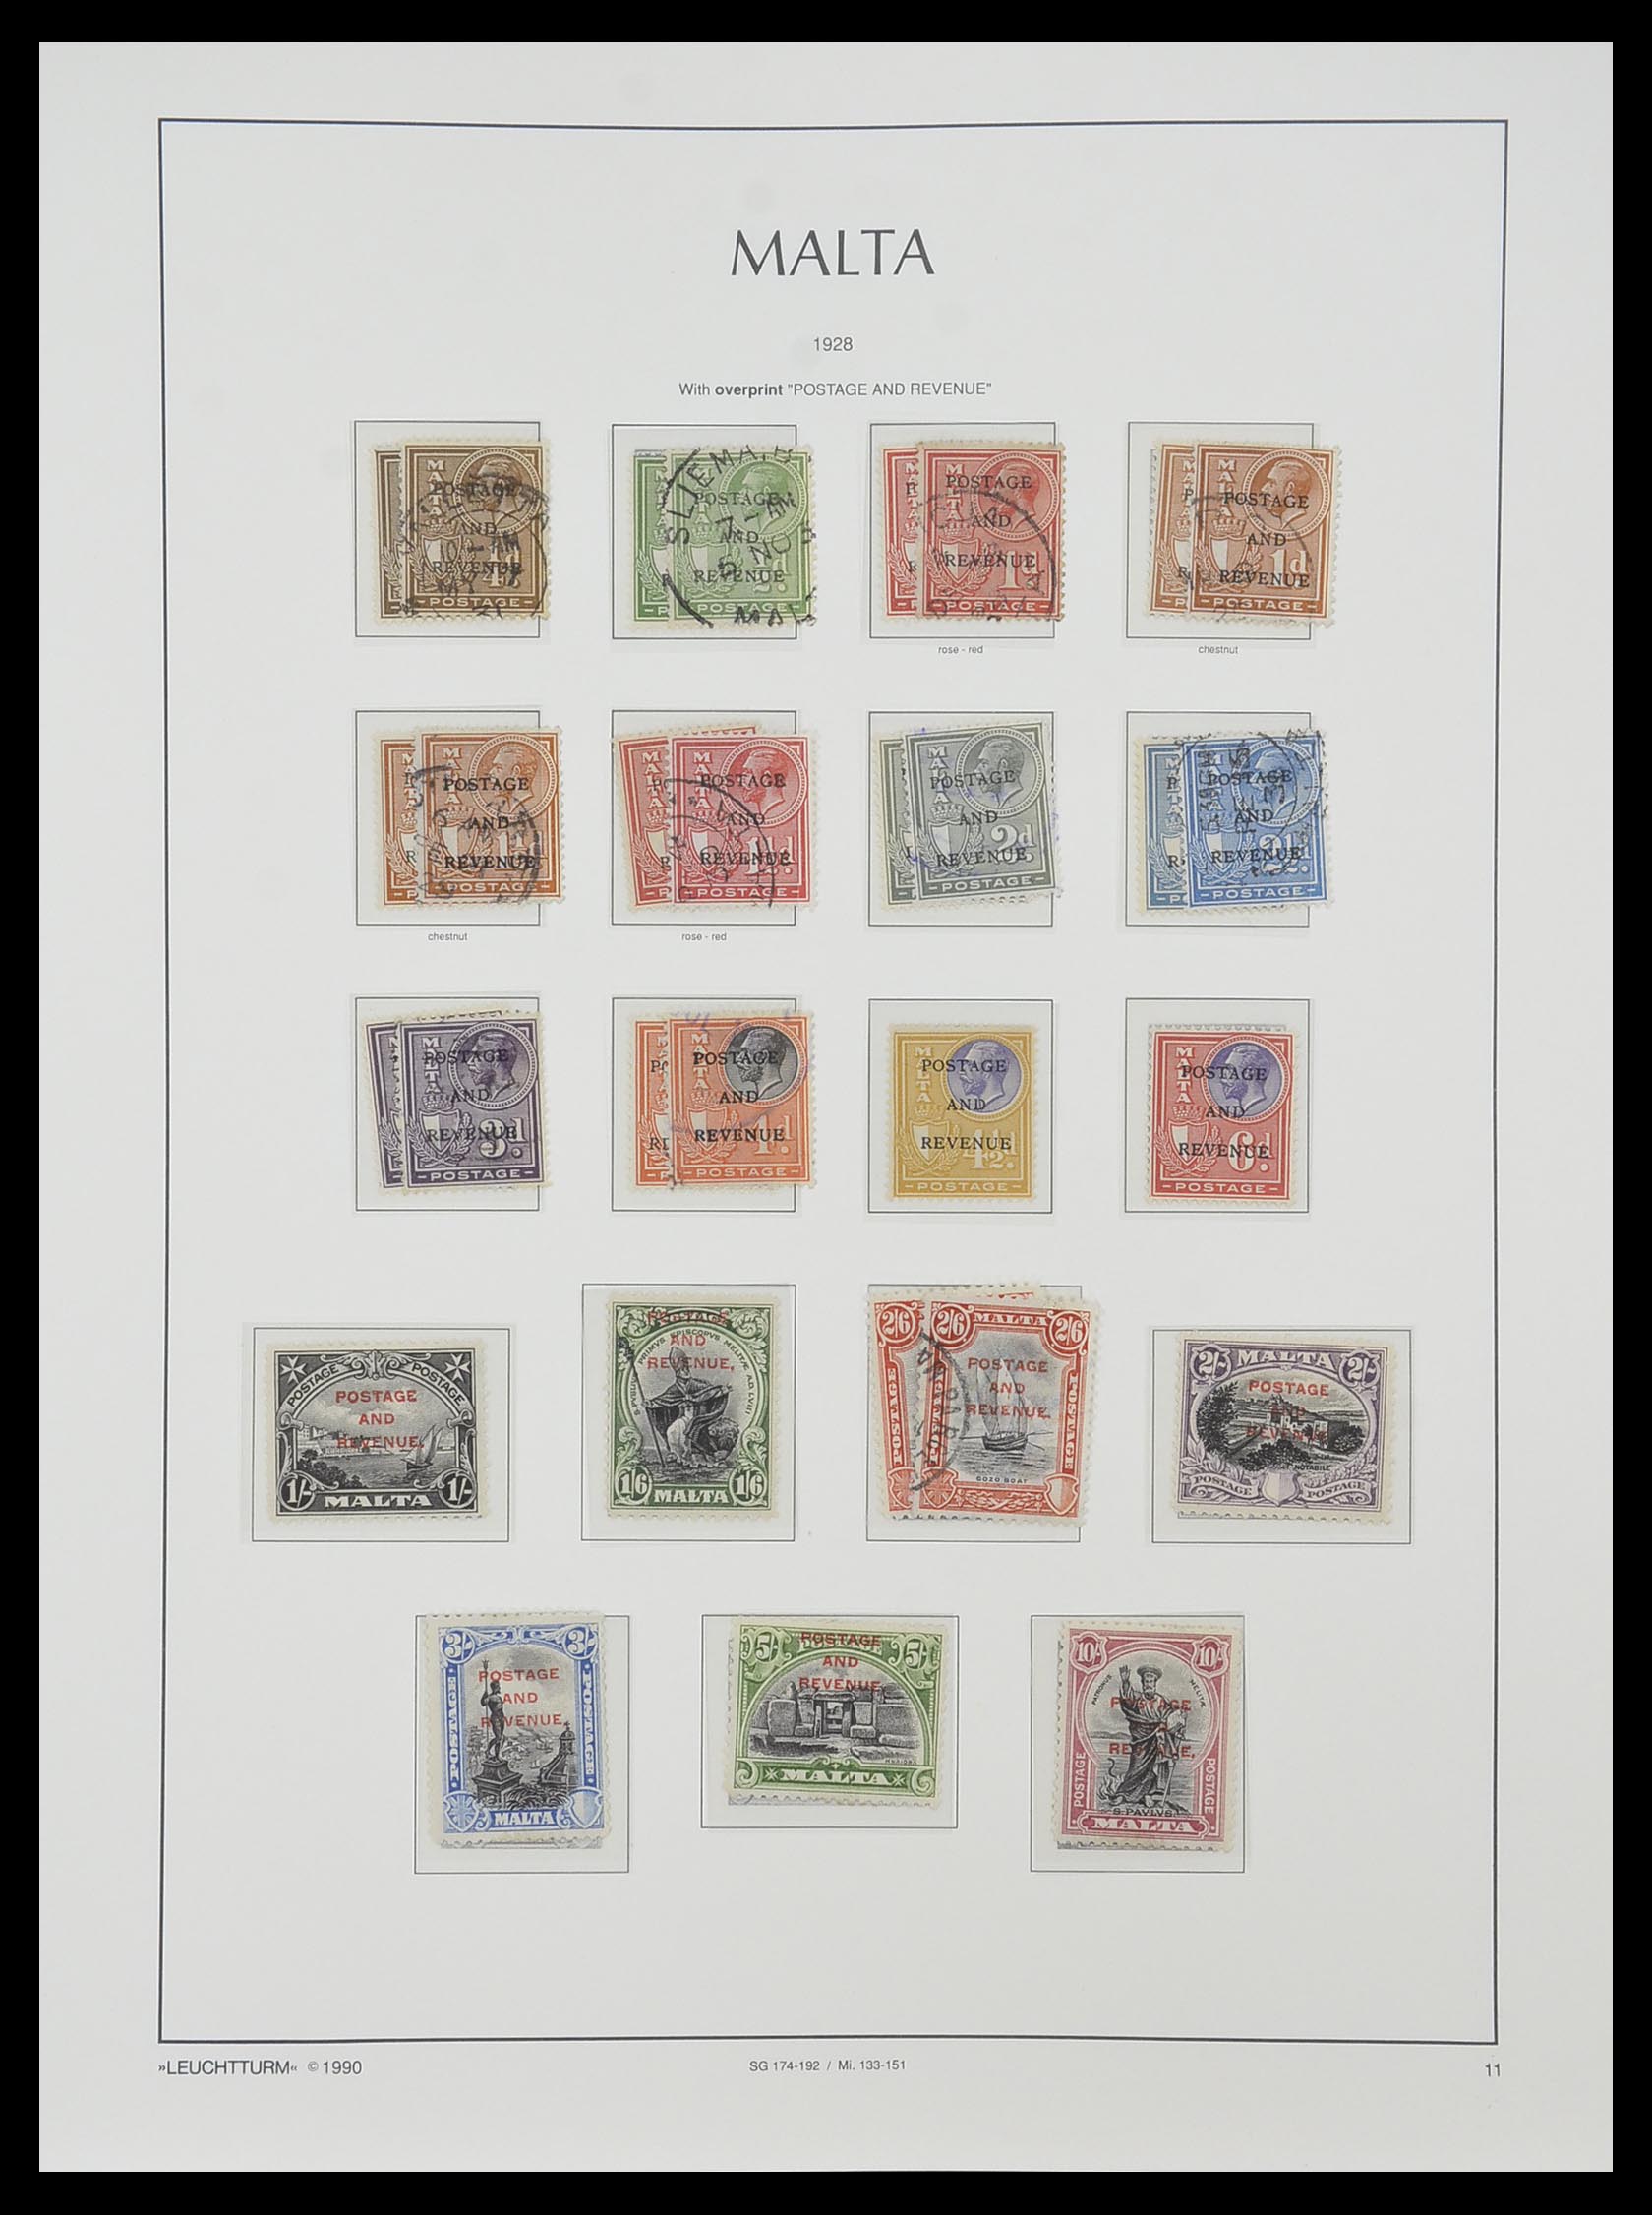 33968 011 - Stamp collection 33968 Malta 1861-2001.